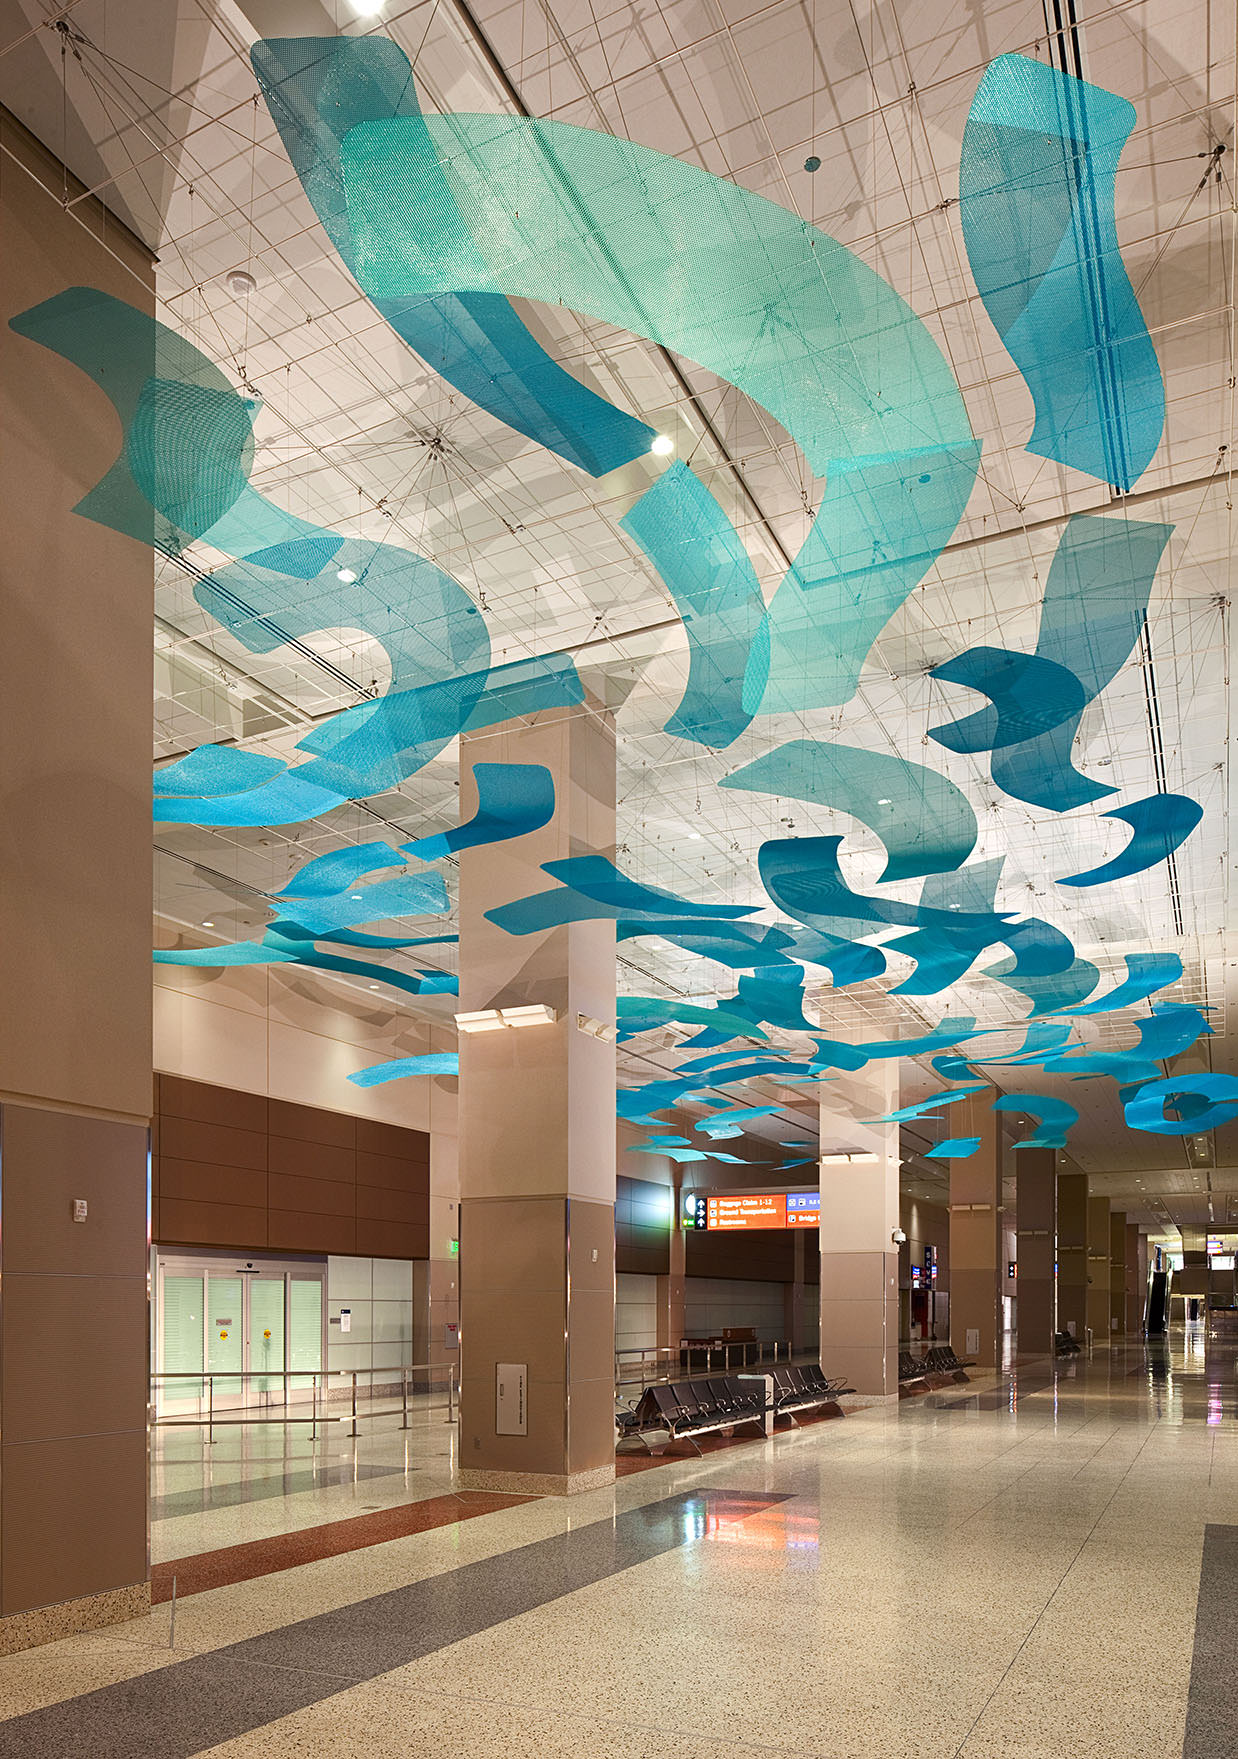 Blue Arroyo, public art sculpture by Talley Fisher in McCarran International Airport.